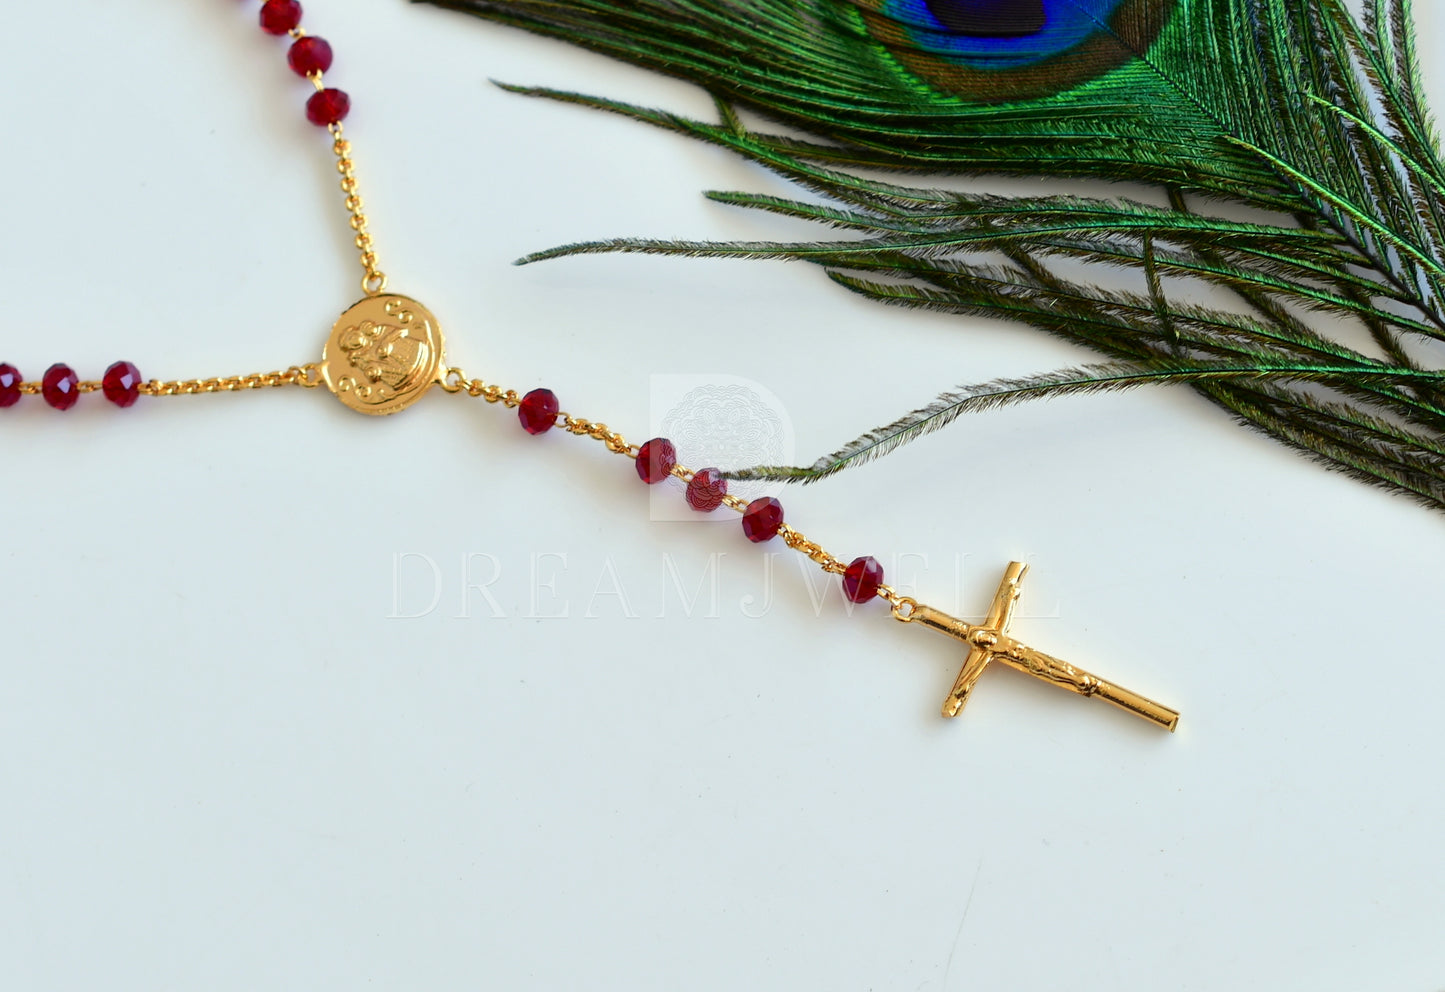 Gold tone Red beads Christian cross chain dj-35802